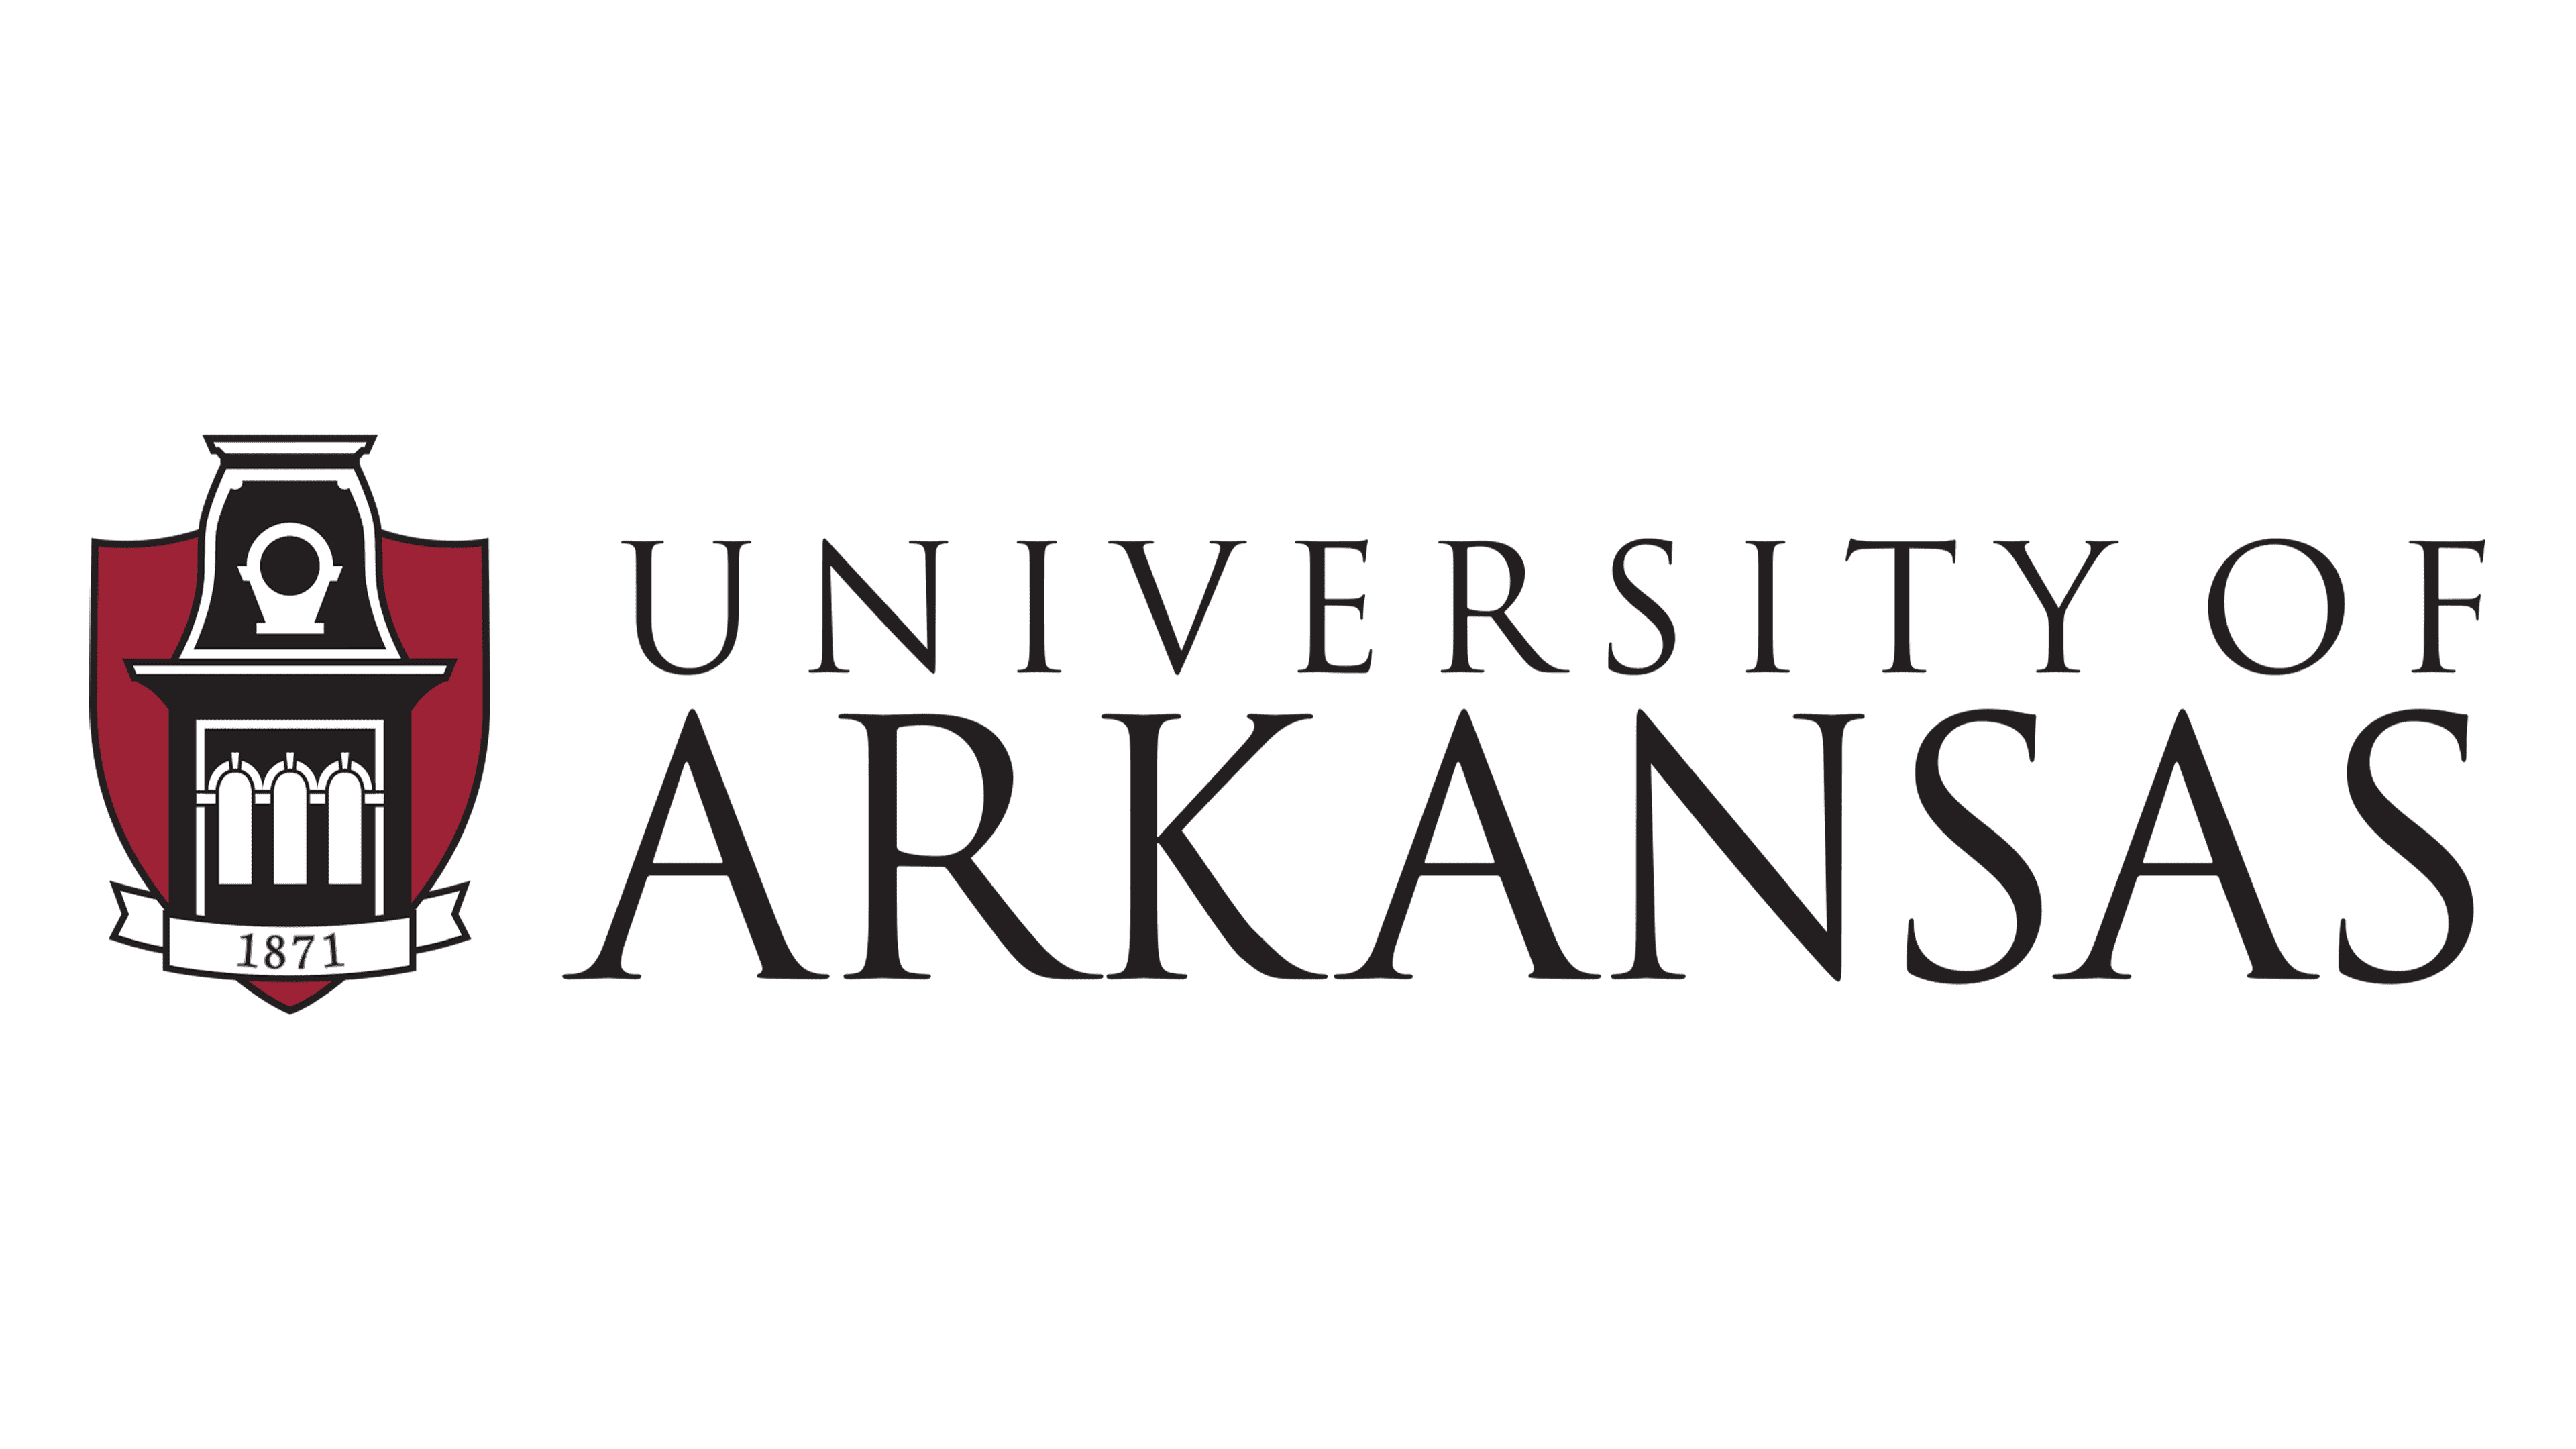 University of Arkansas 로고 및 기호, 의미, 역사, PNG, 브랜드